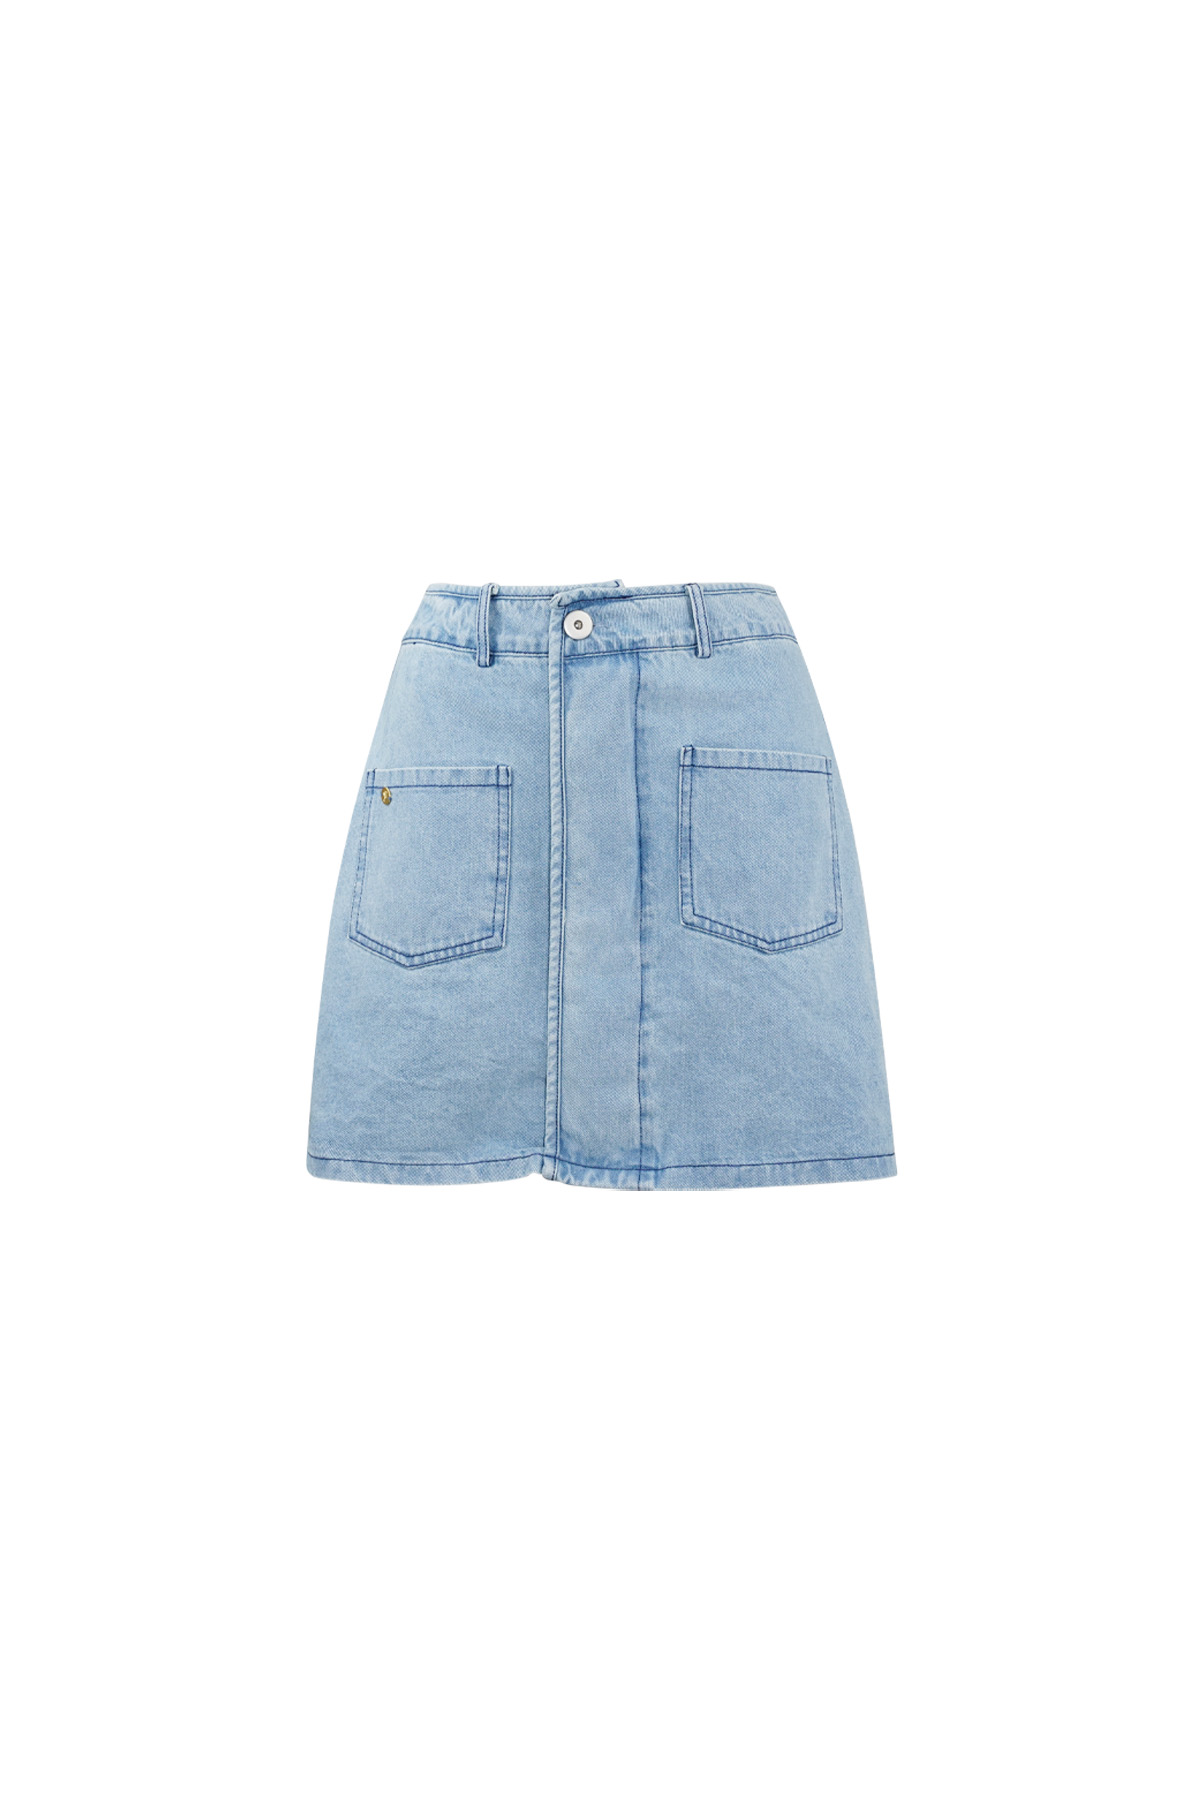 Denim skirt with pockets - blue